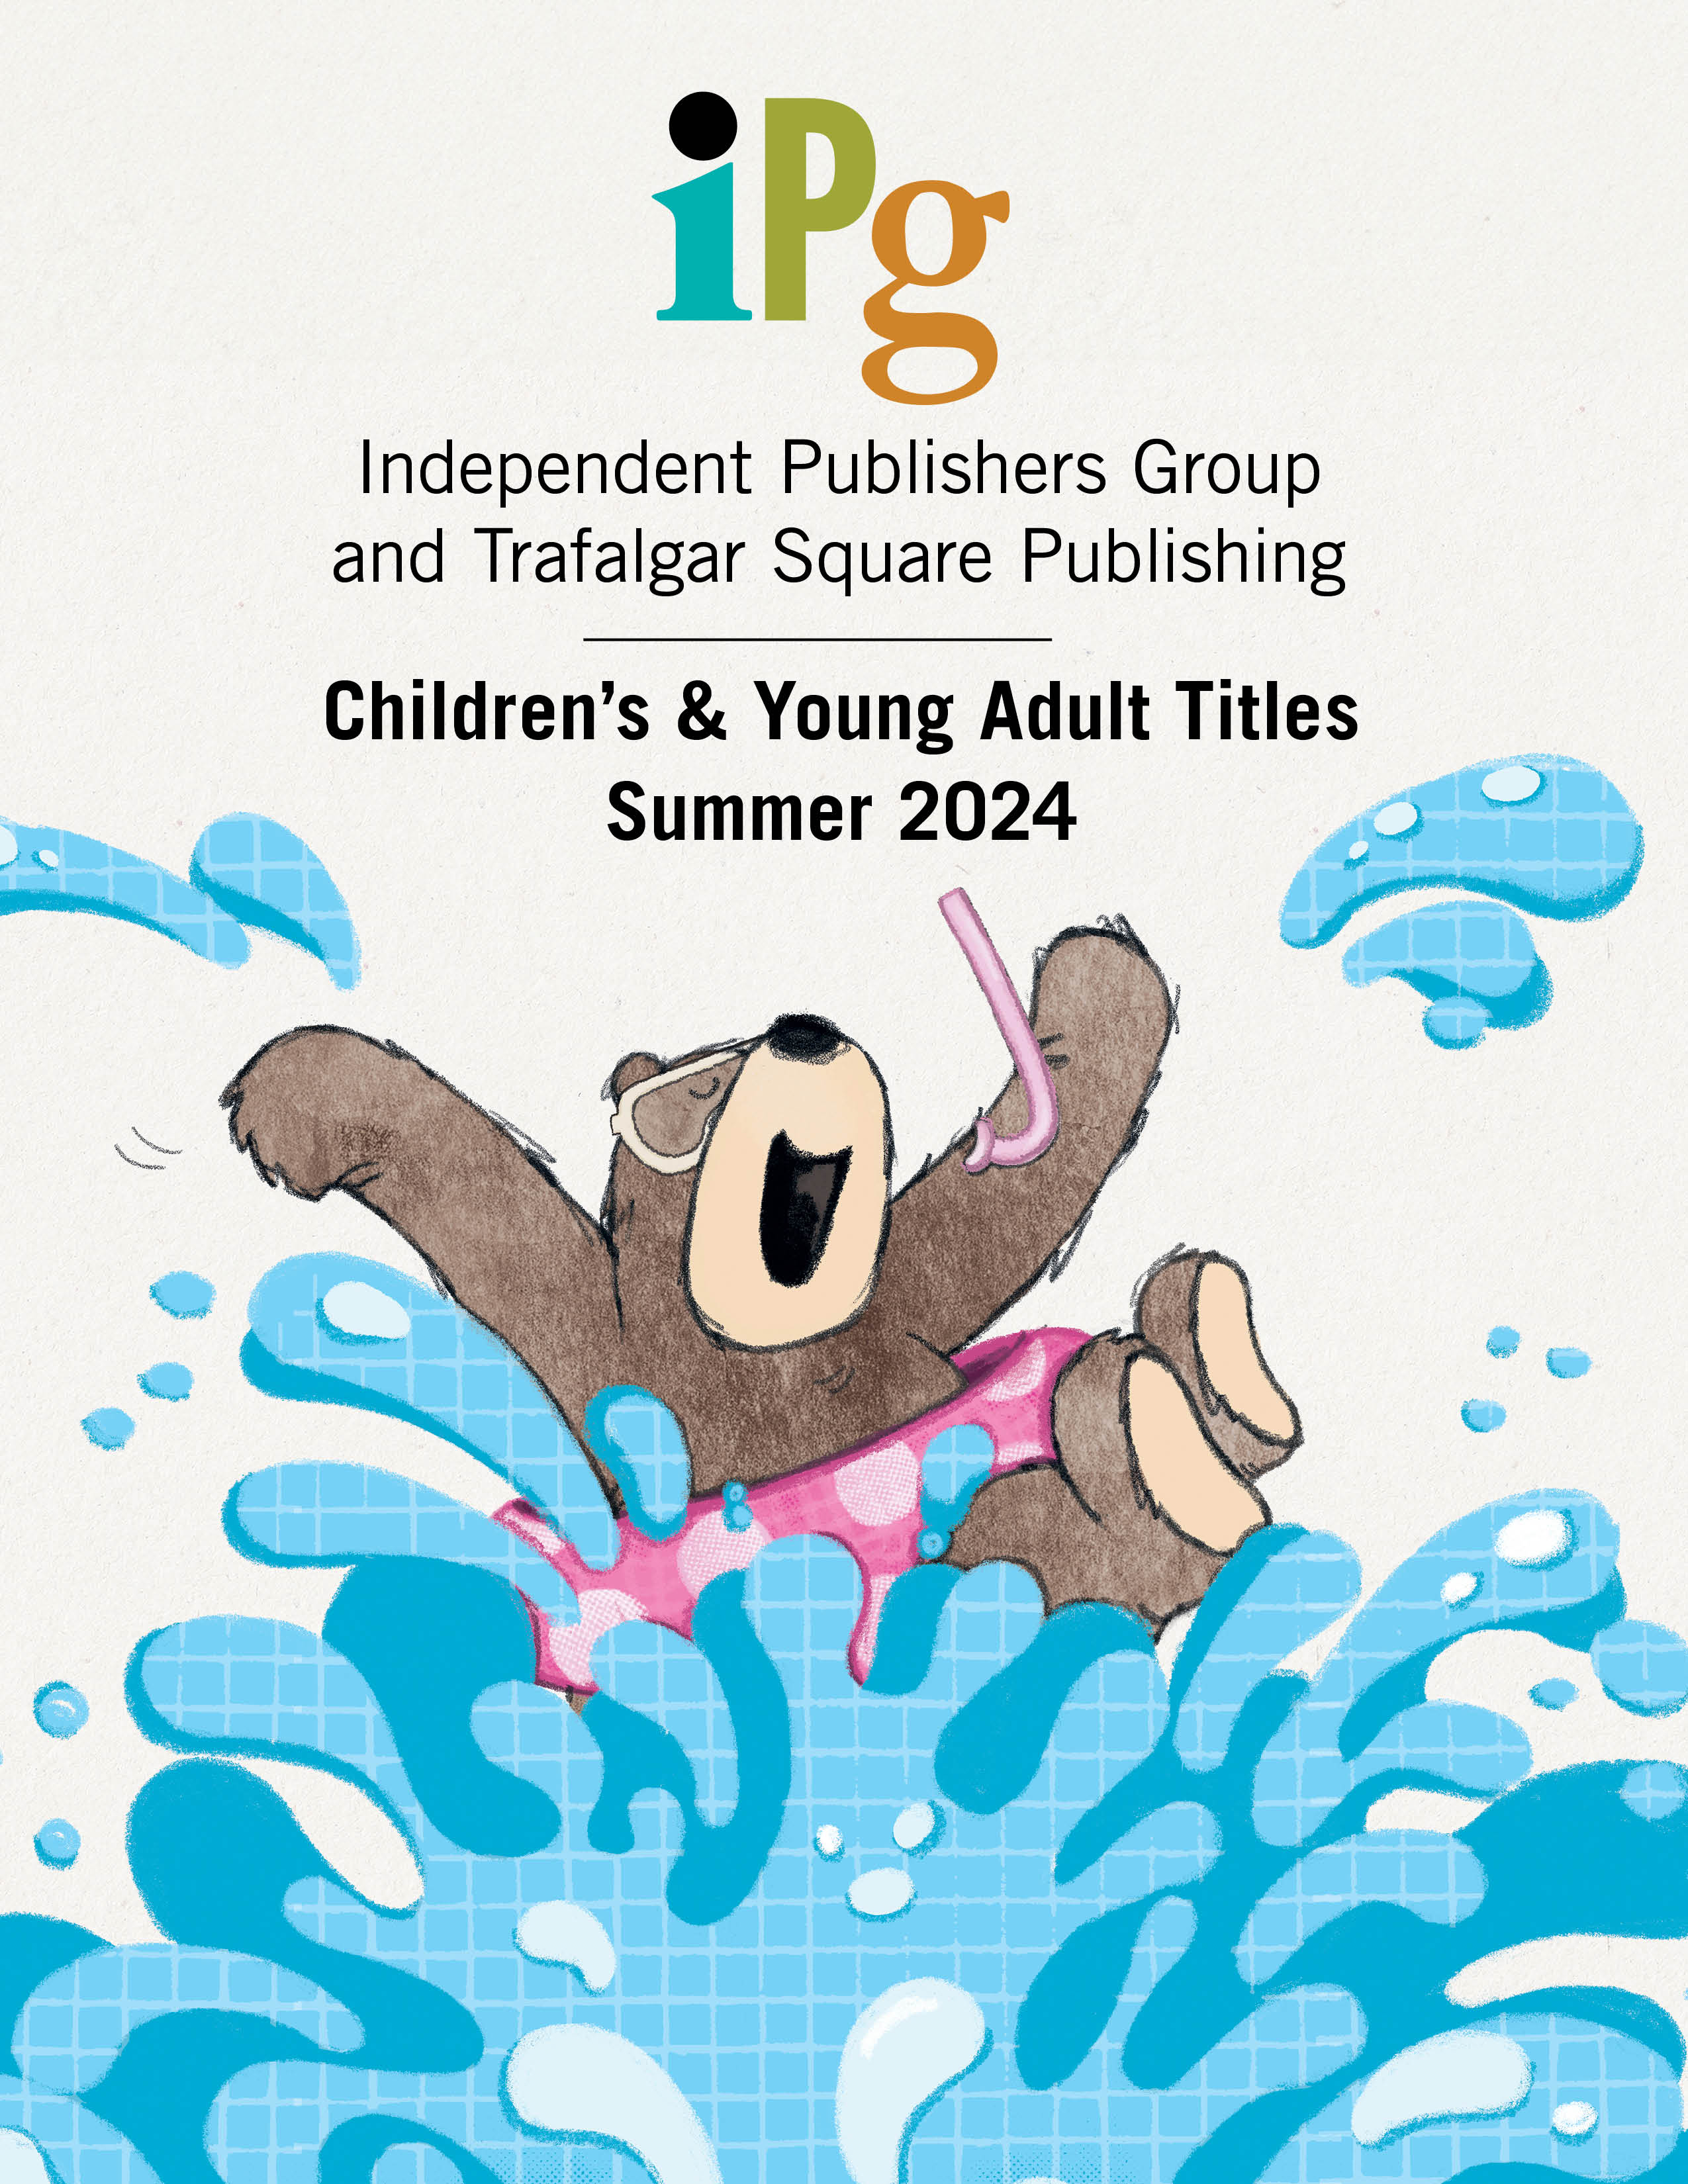 IPG & Trafalgar Square Publishing Children's & Young Adult Catalog